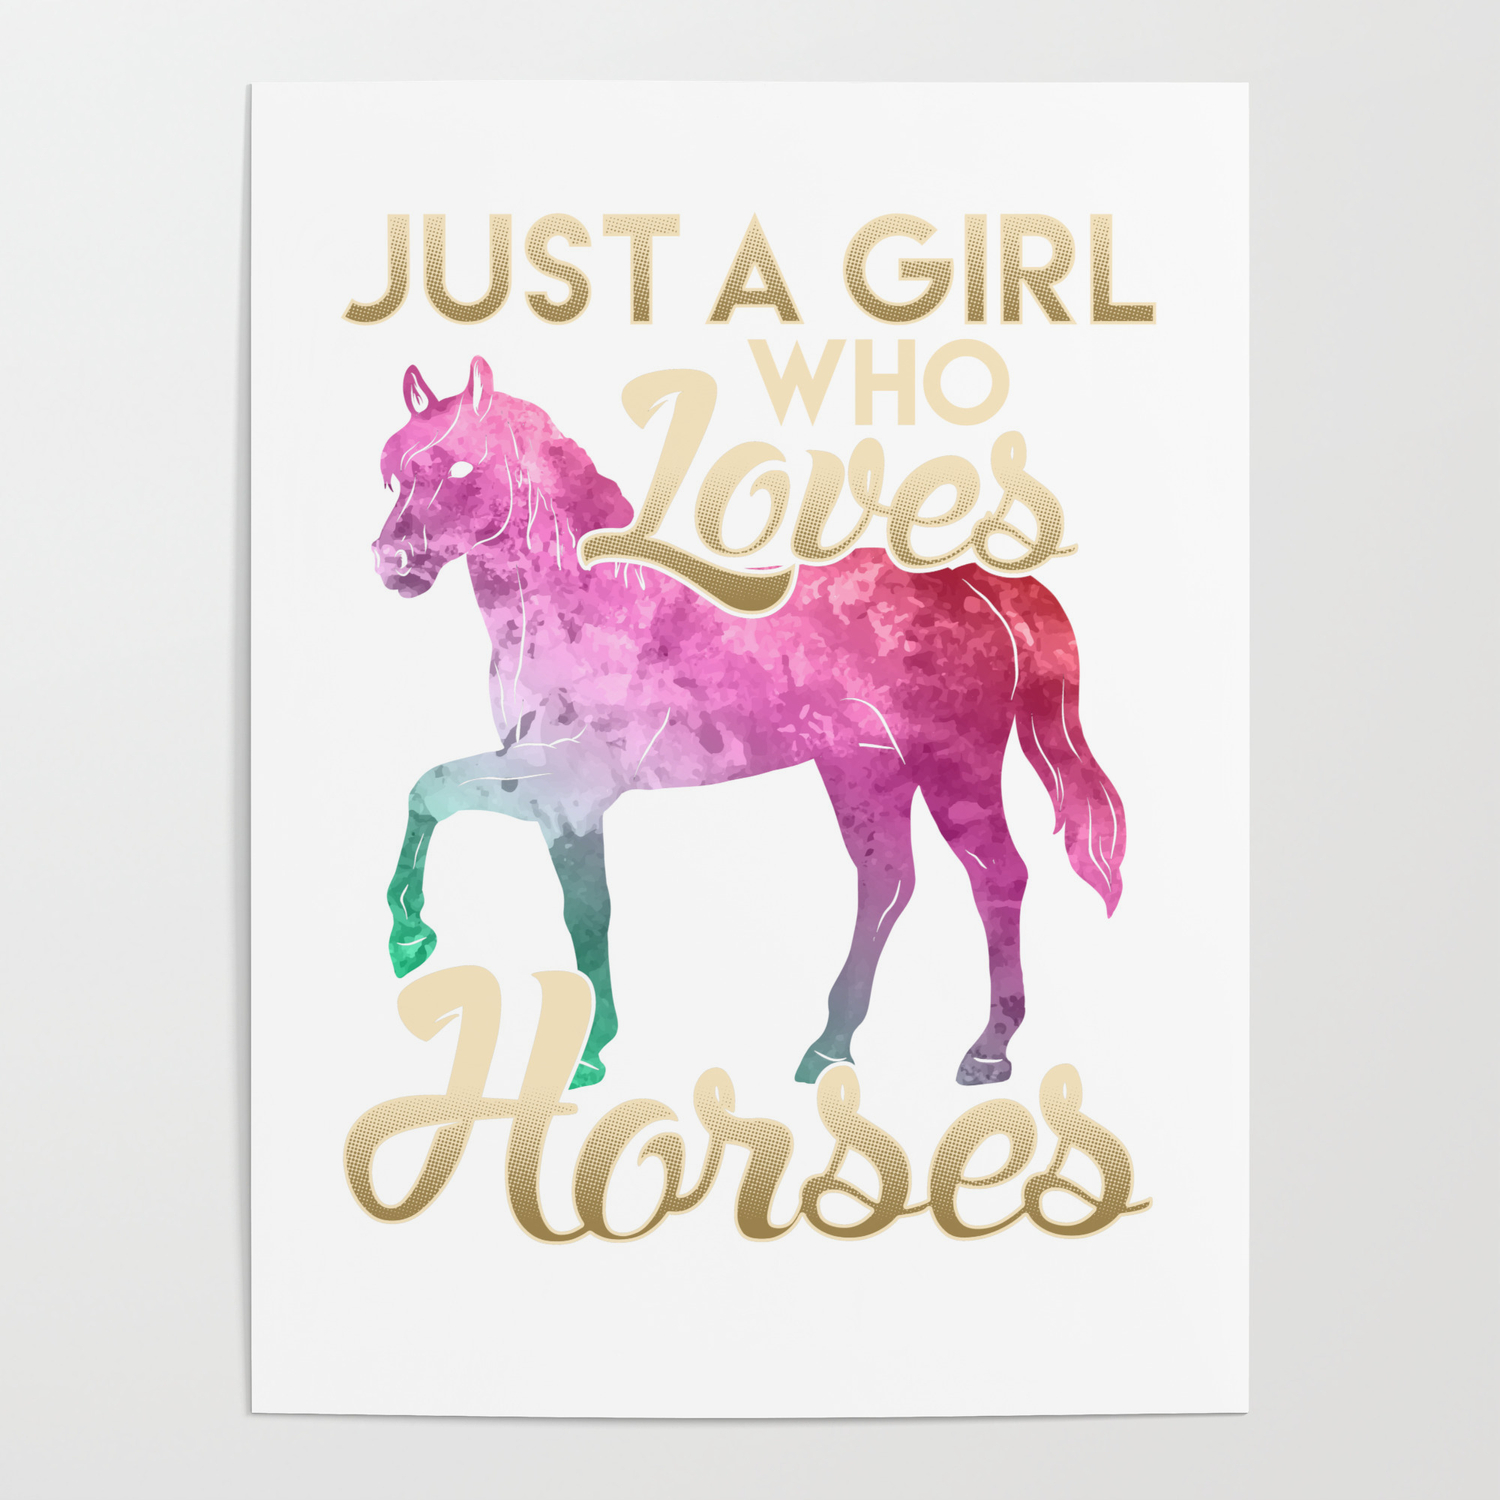 Just a Girl Who Loves Horses Lover Girls Themed Throw Pillow Horse Girl 